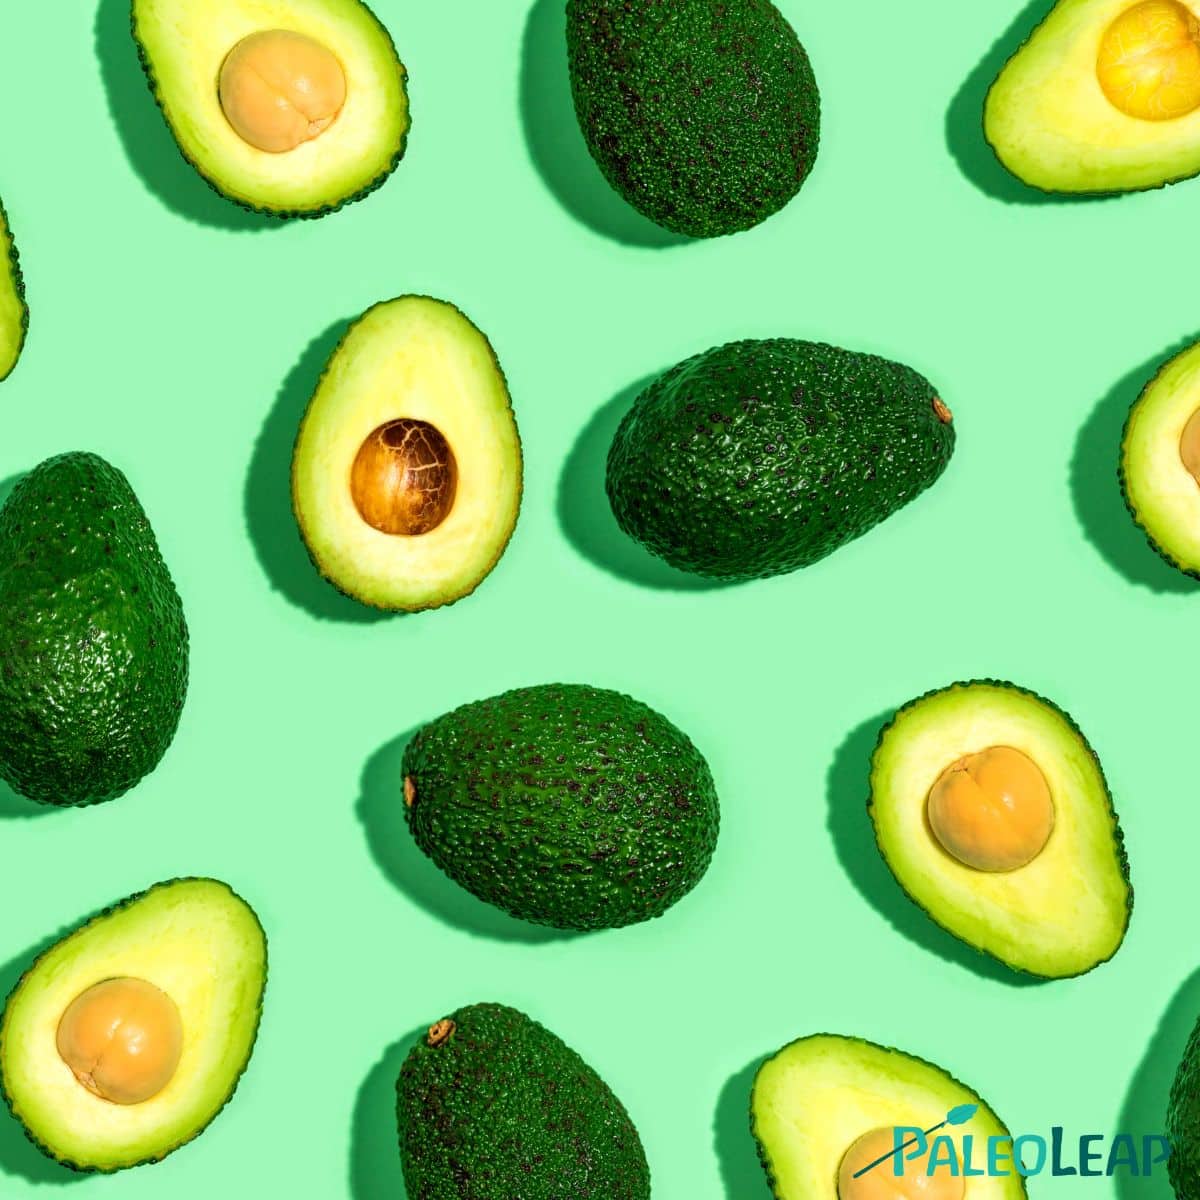 avocado illustration